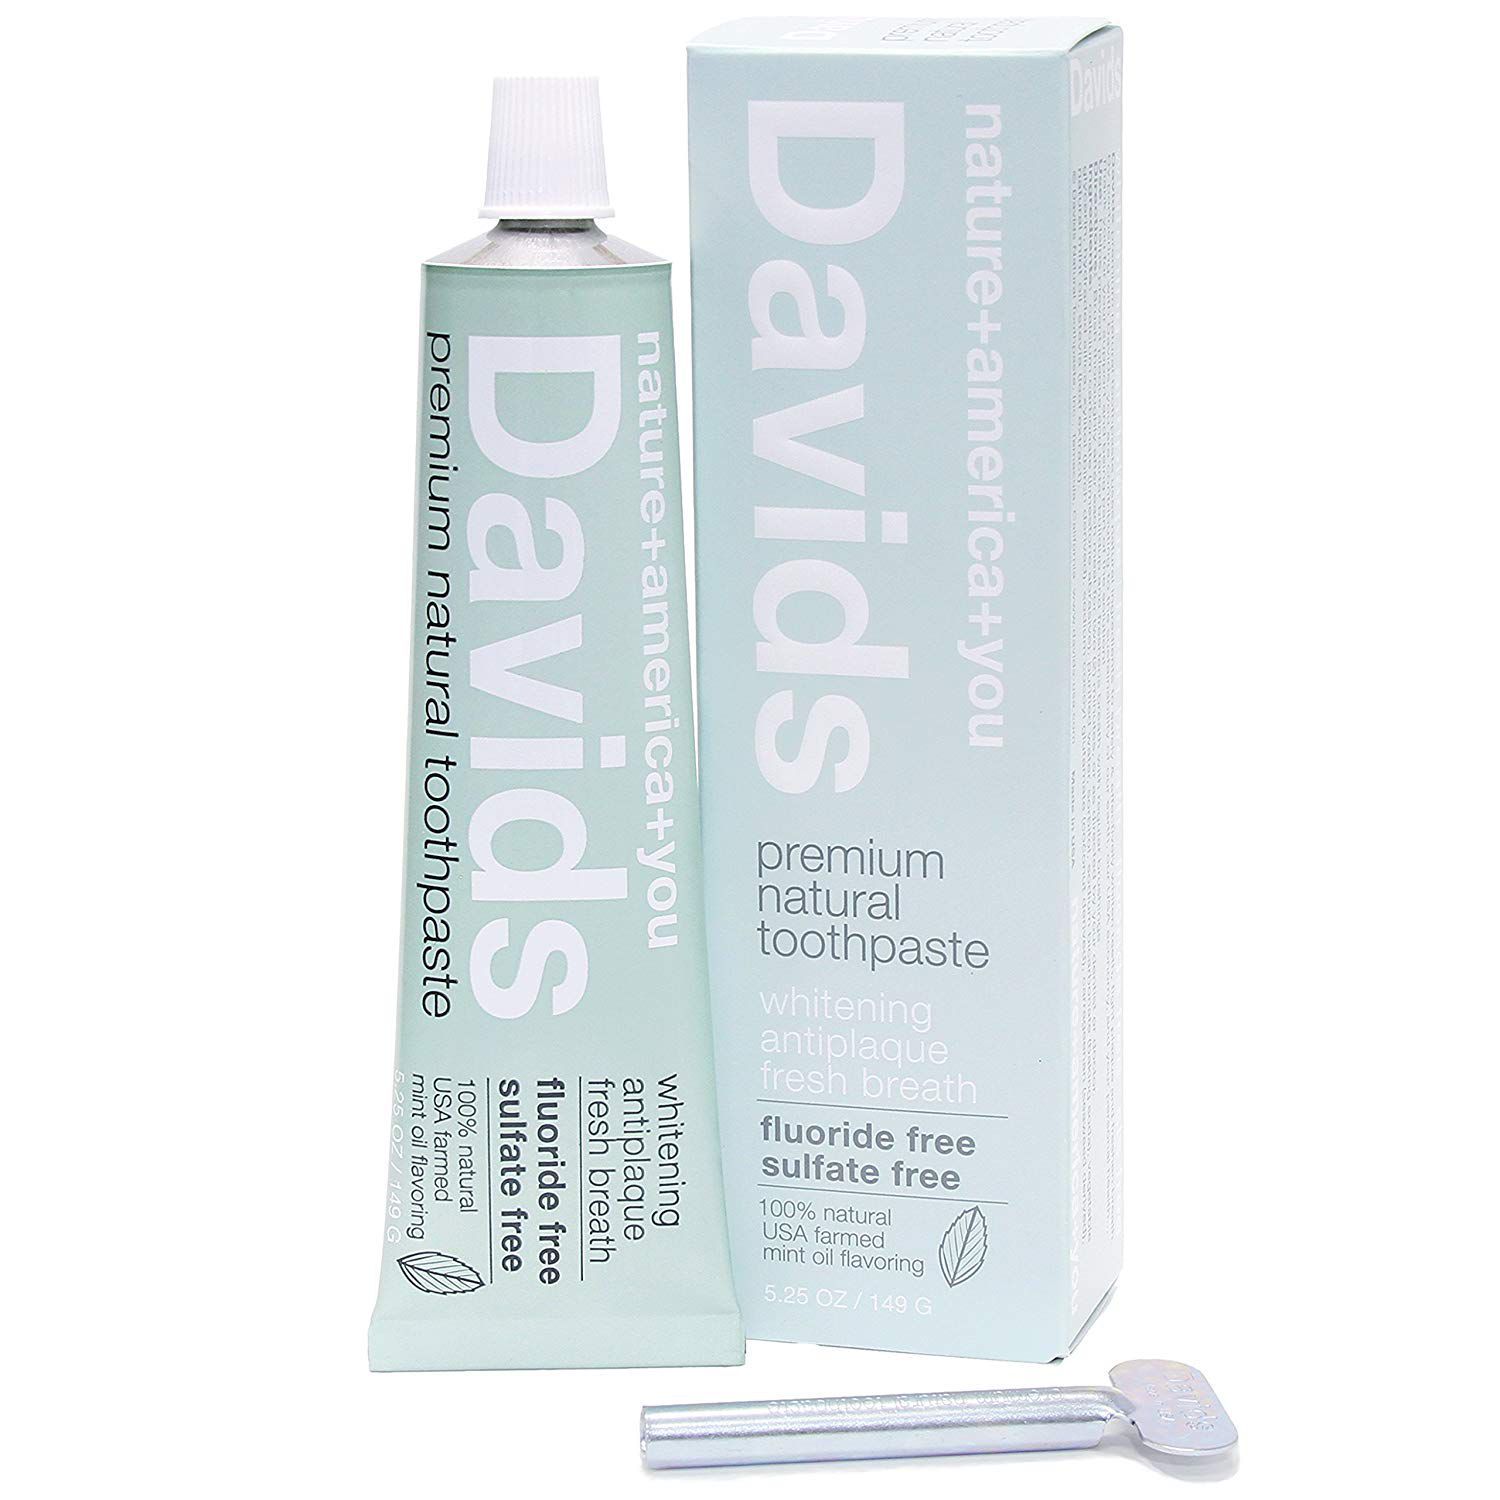 Davids Premium Natural Toothpaste / Peppermint